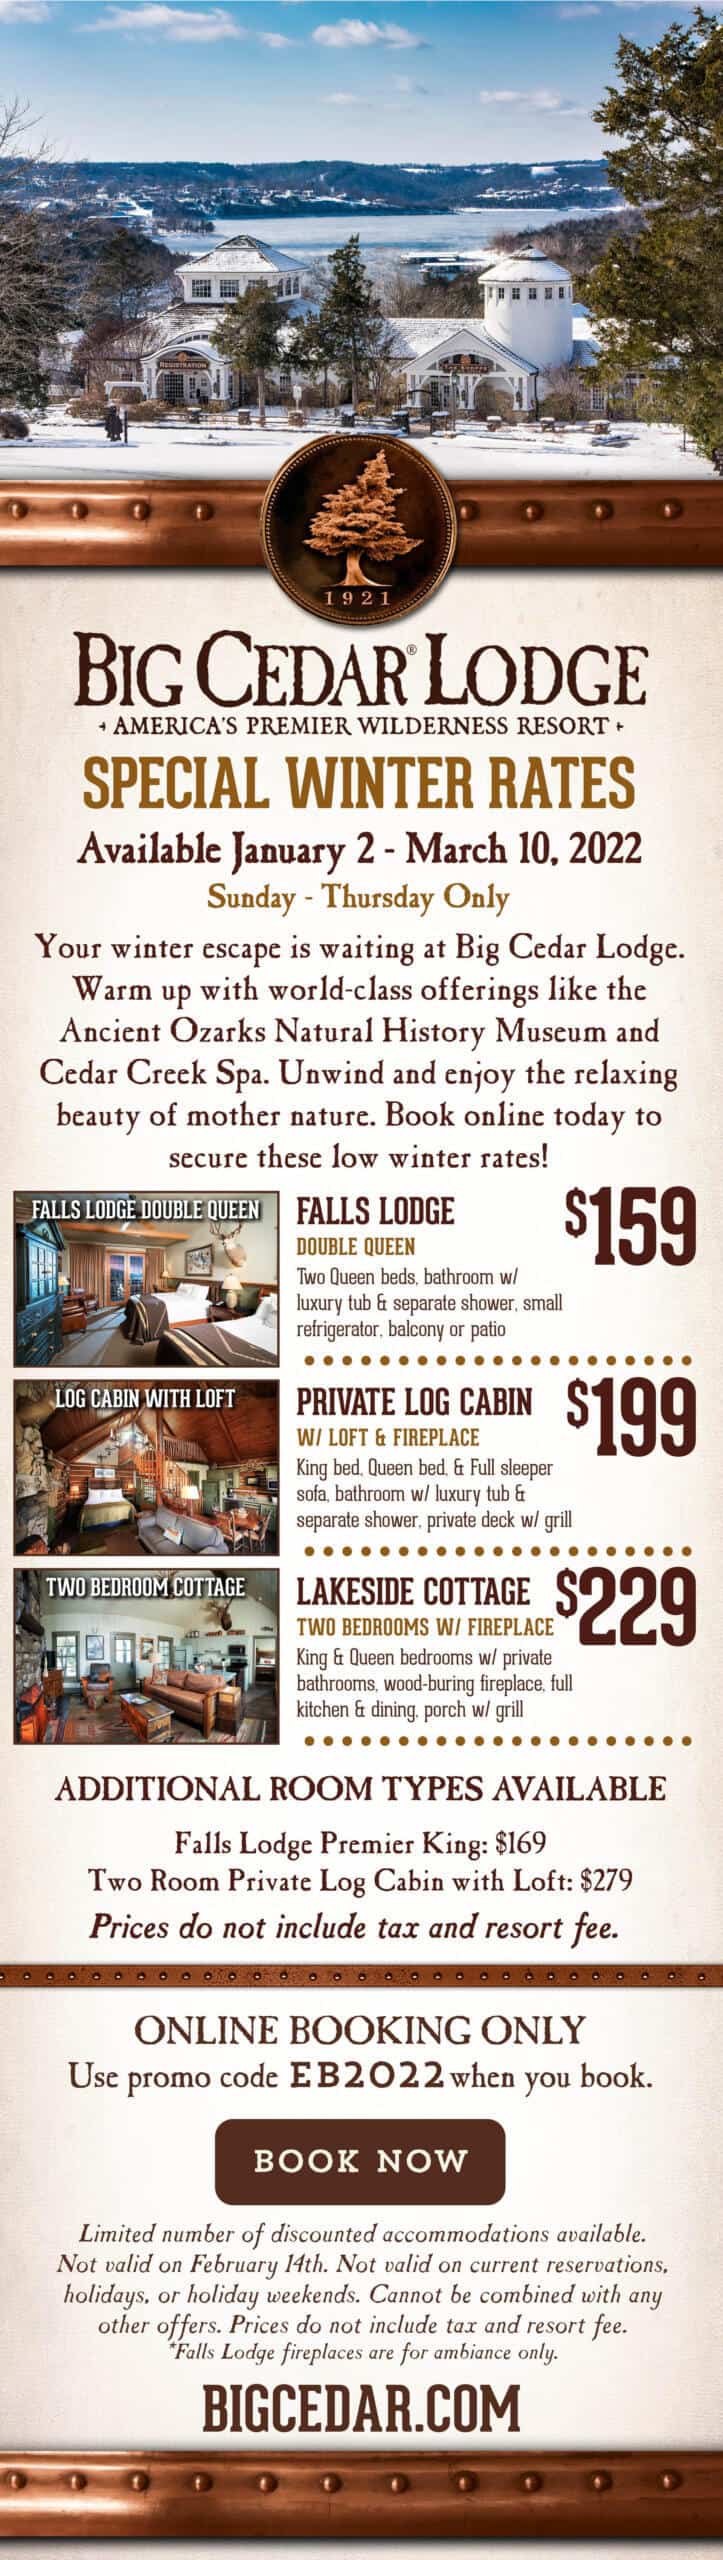 Big Cedar Lodge Winter Specials